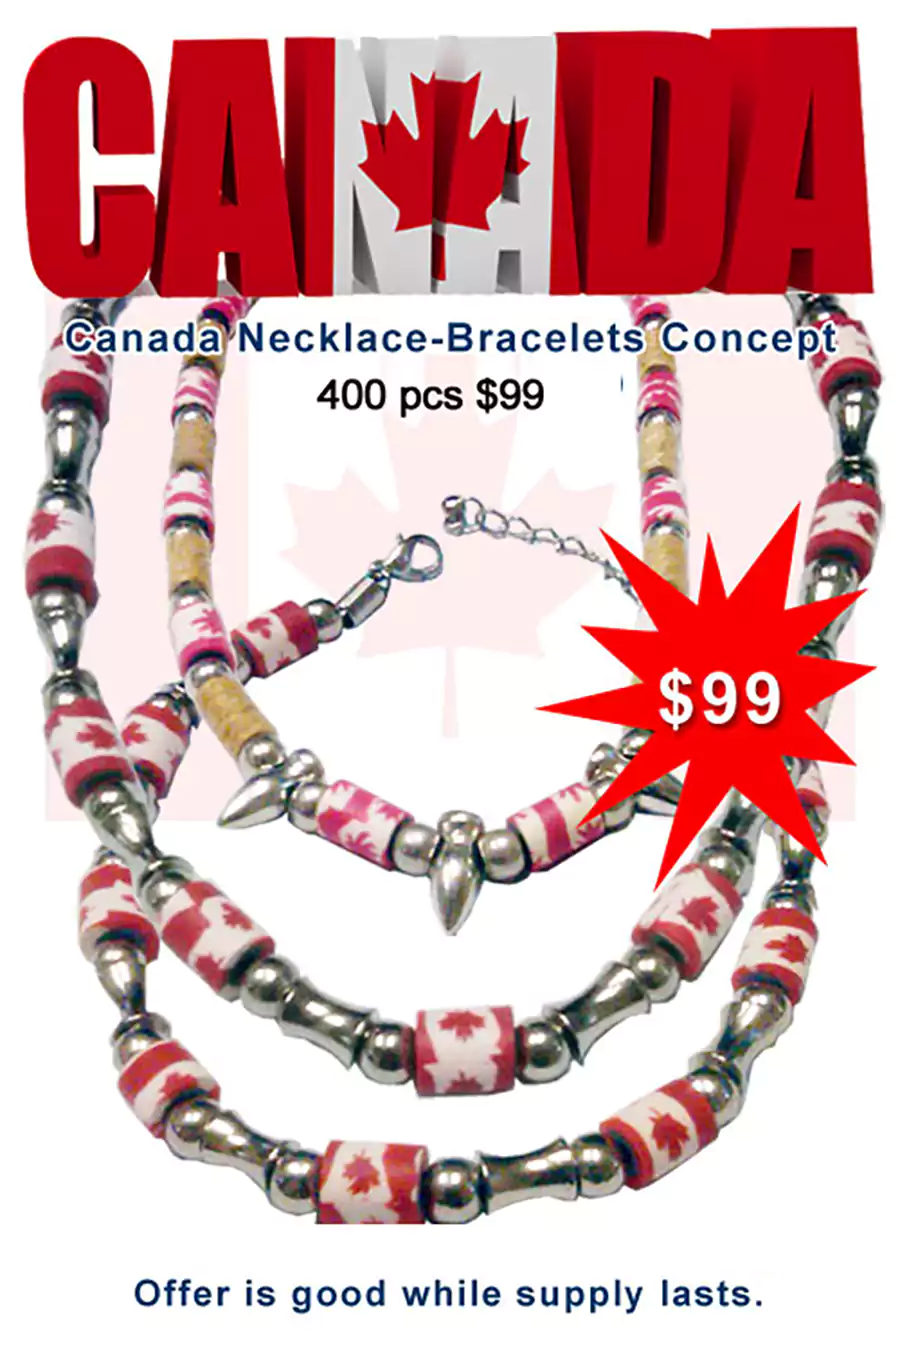 Clearance: Canada Necklace-Bracelets Concept